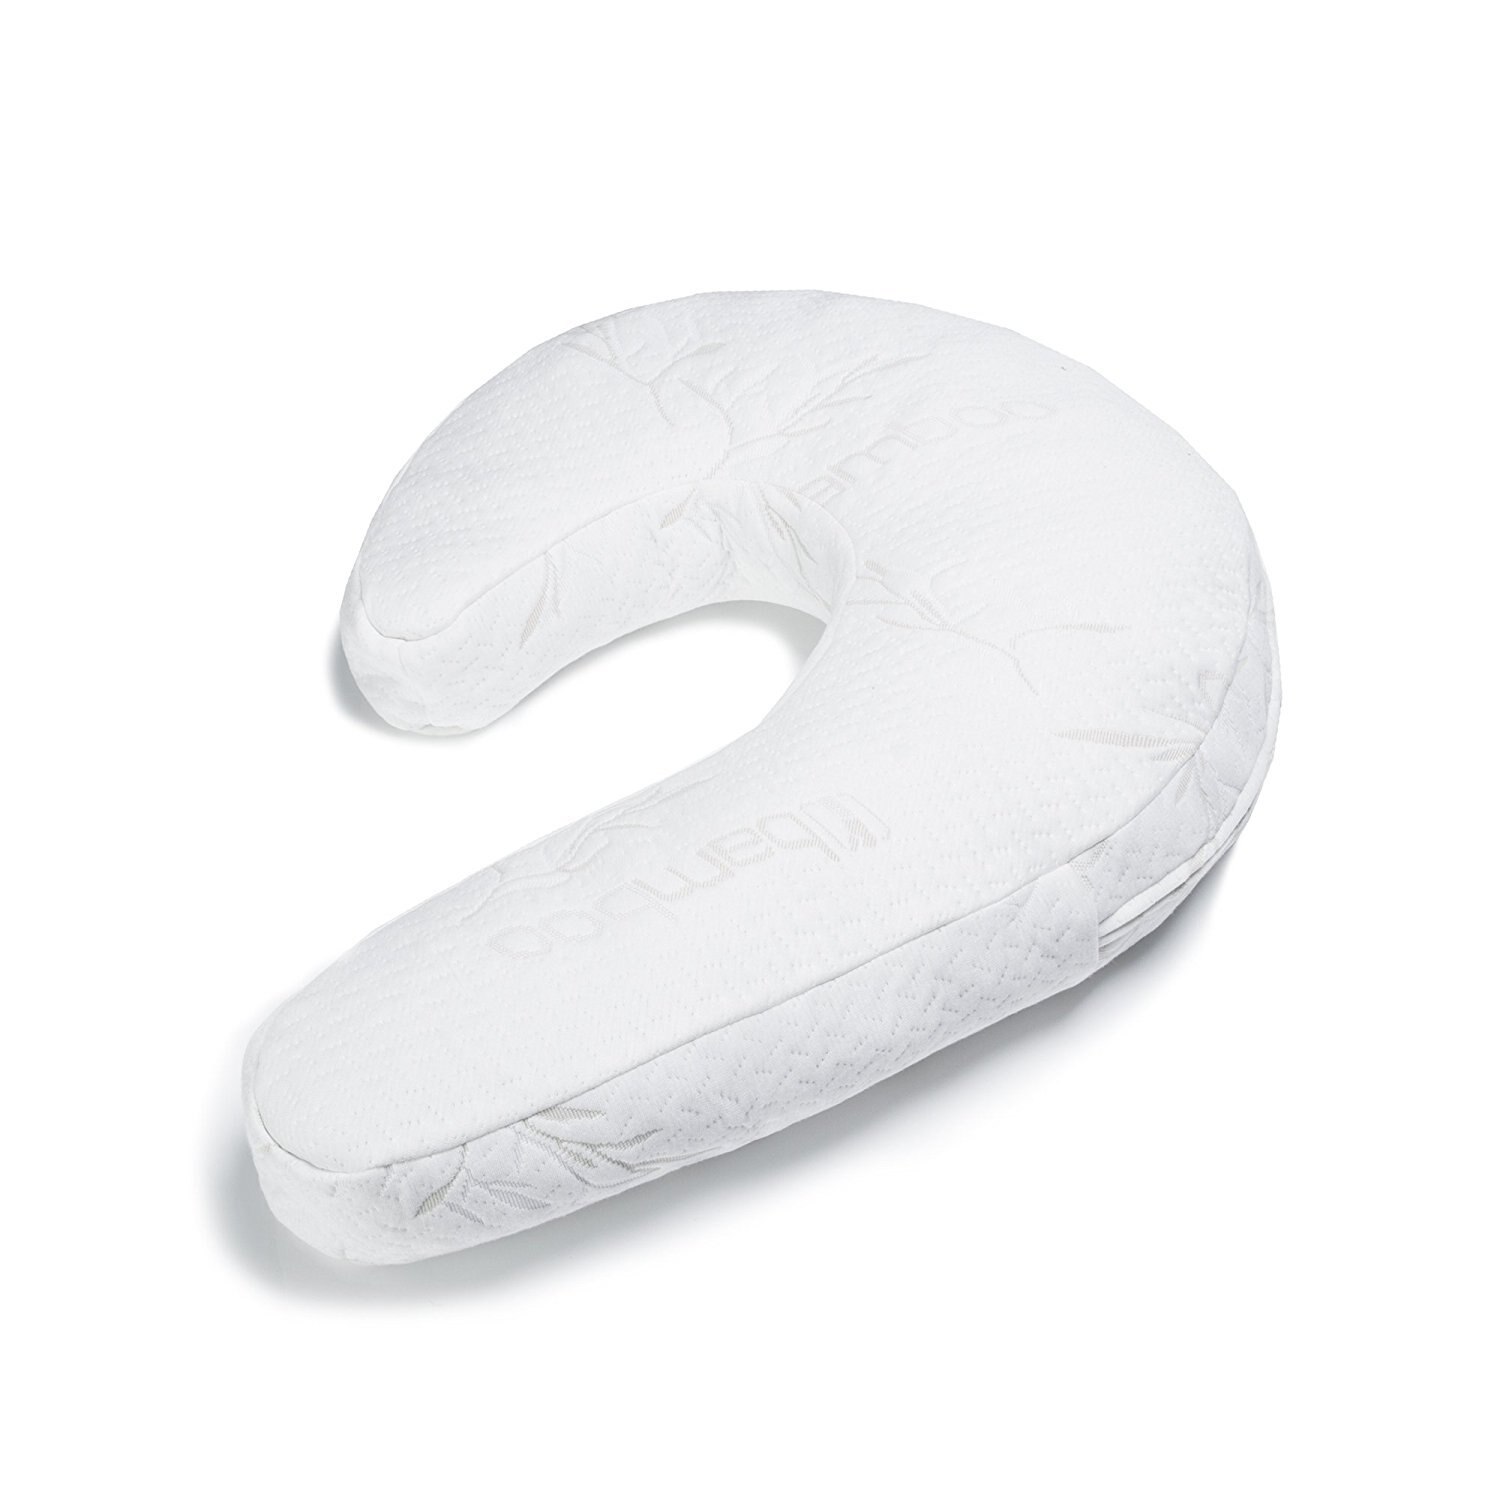 Avana Uno Adjustable Memory Foam Snuggle Pillow for Side